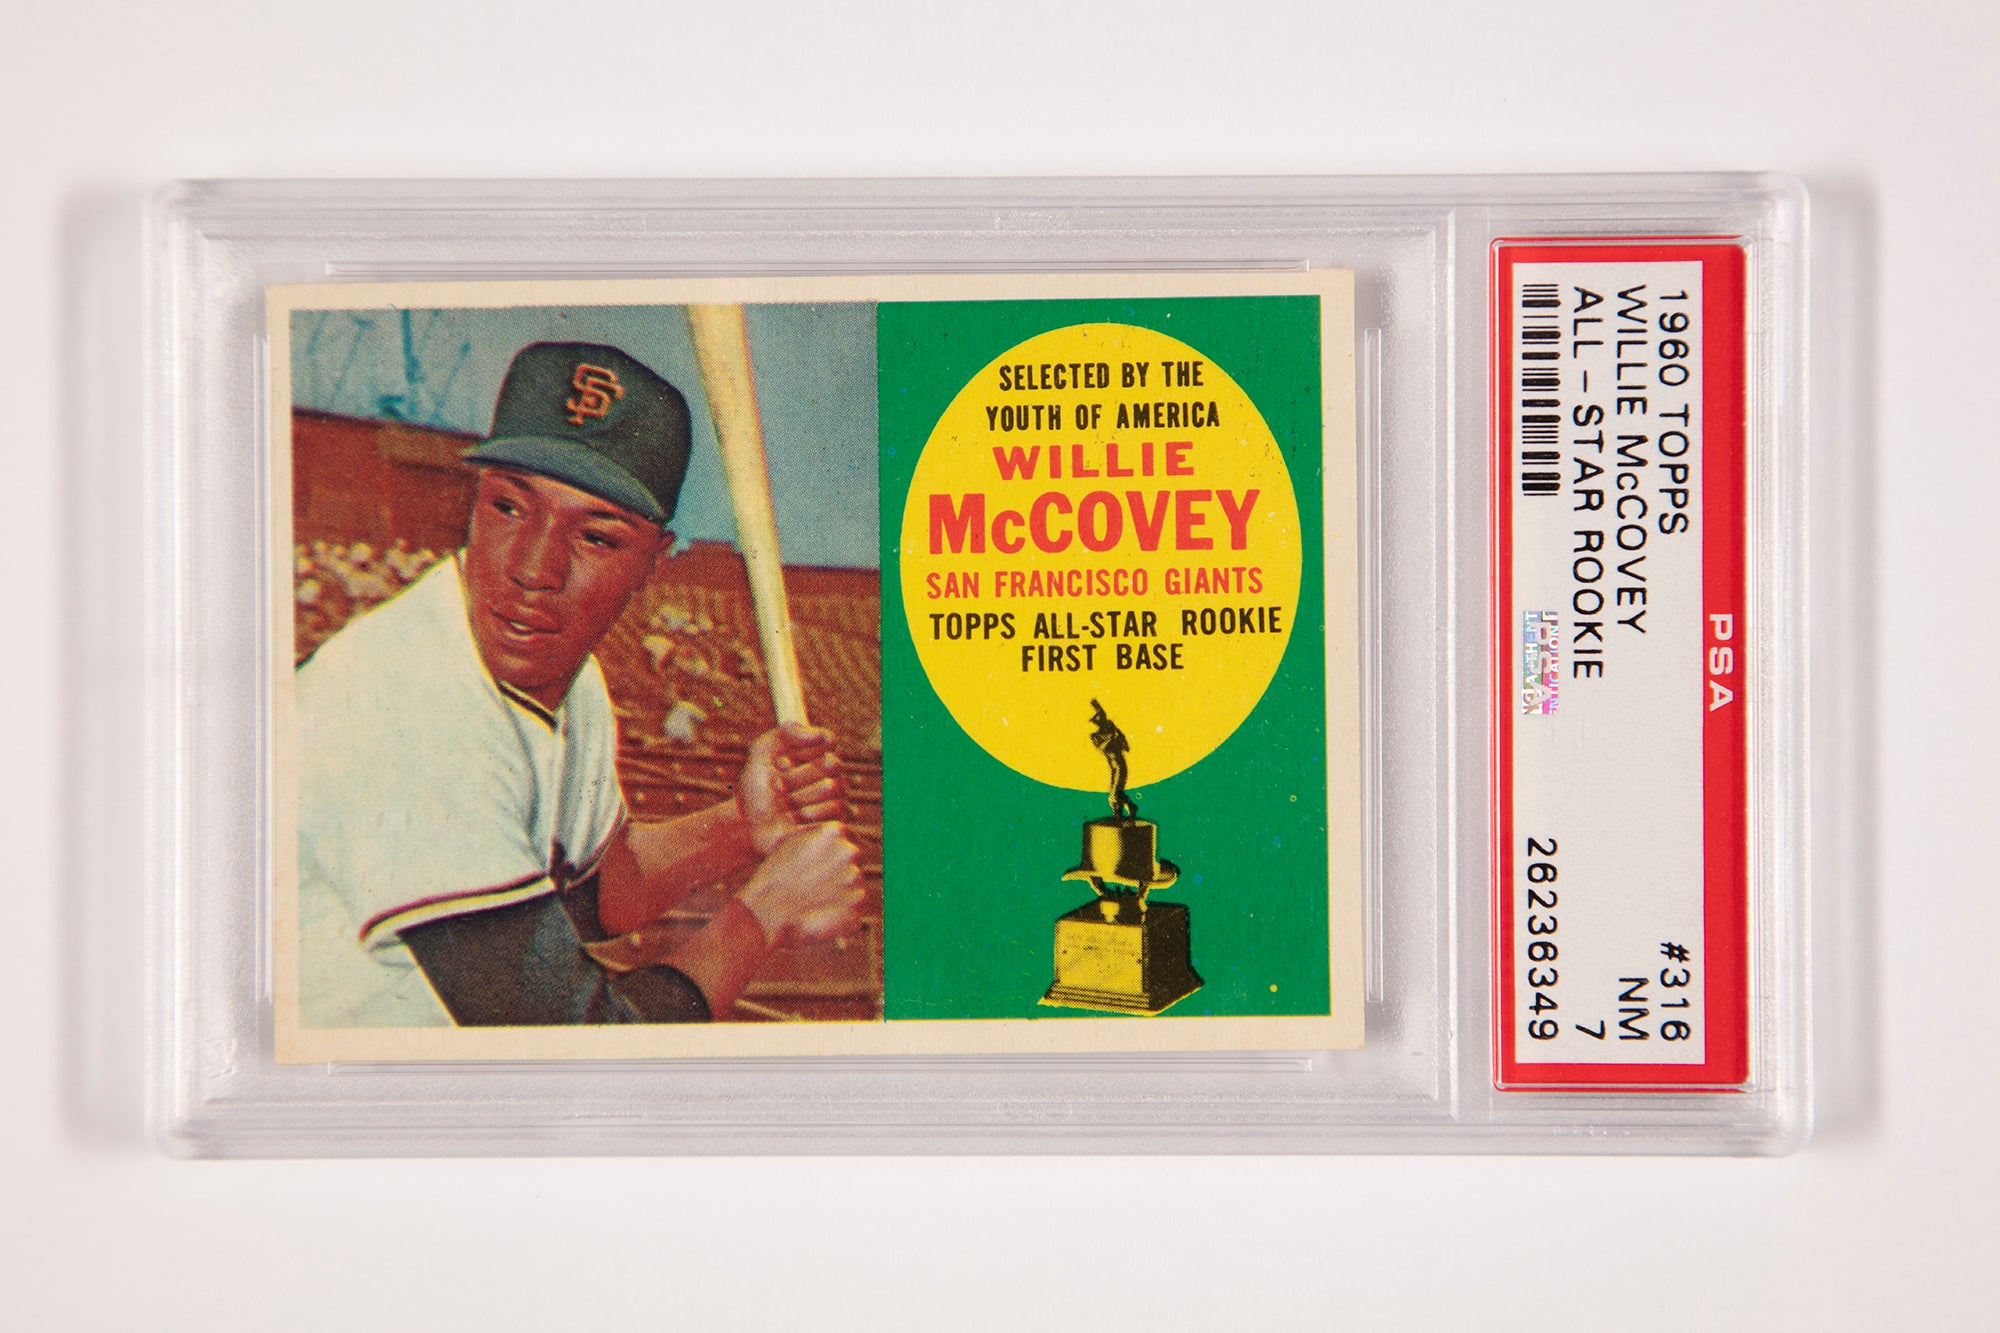 New PWCC cards in Shoebox Treasures highlight integration of baseball